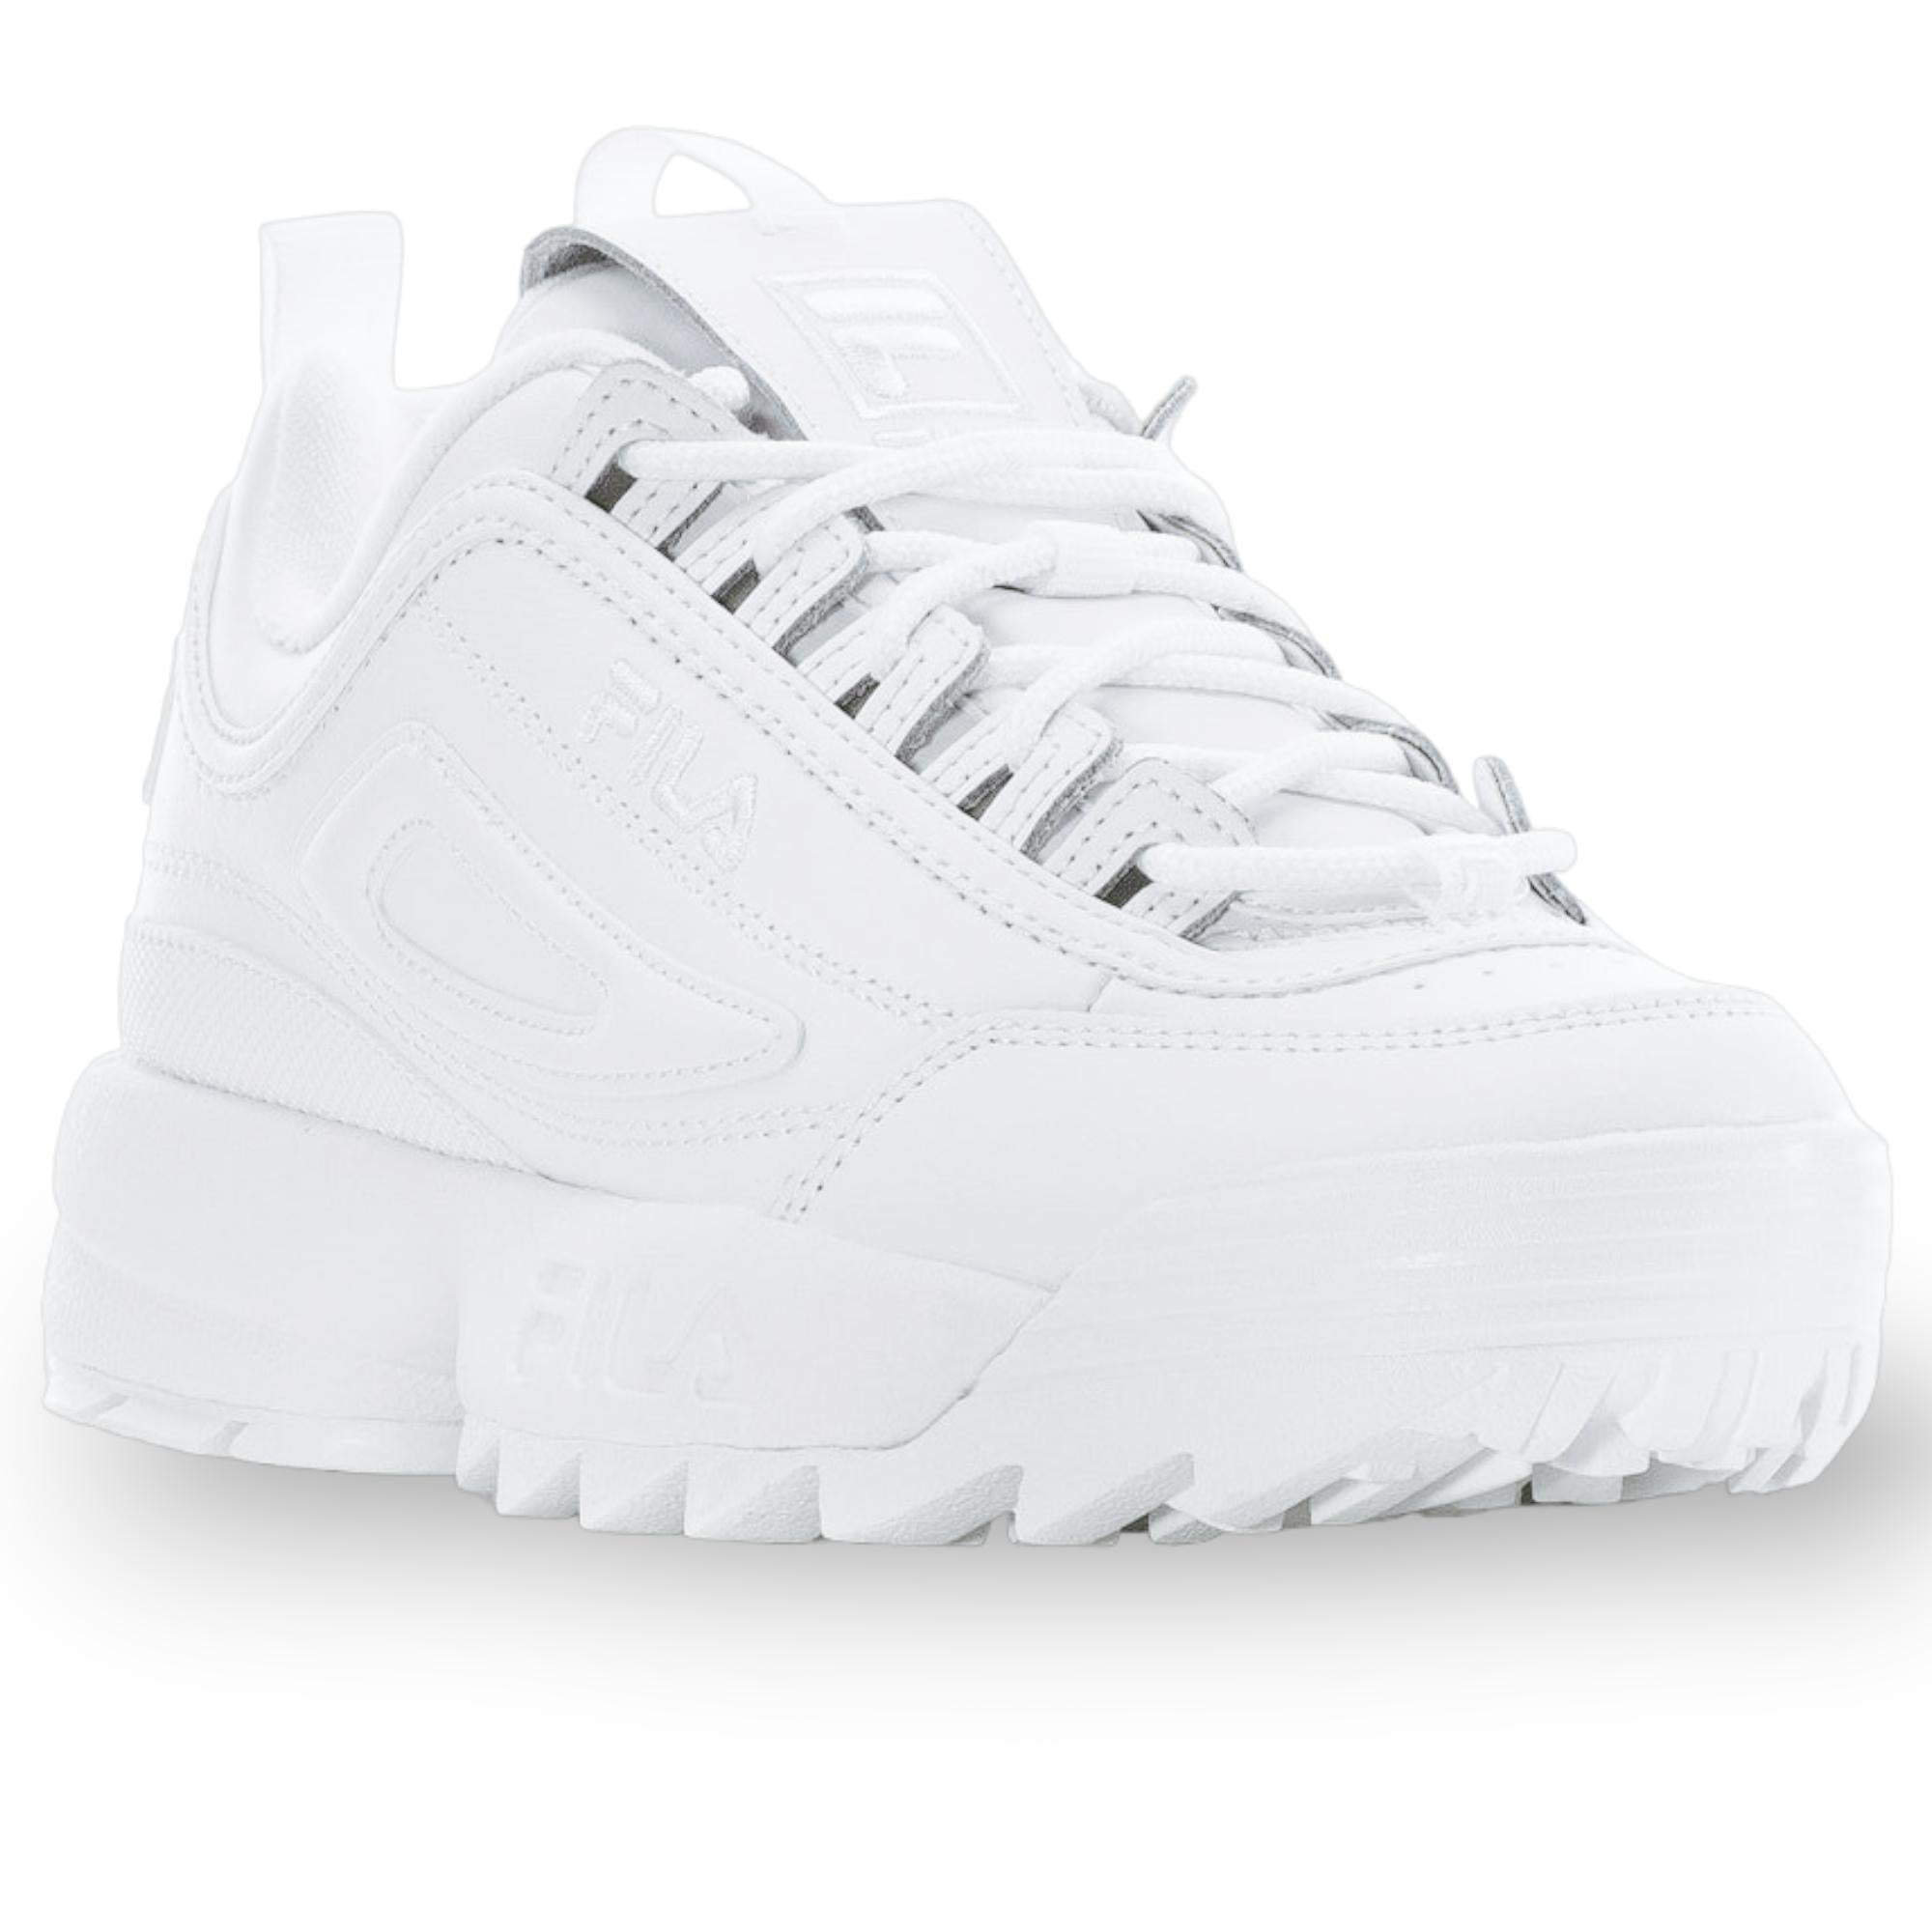 Fila Women's Disruptor 2 II Sneaker All White Comfortable Walking Shoe